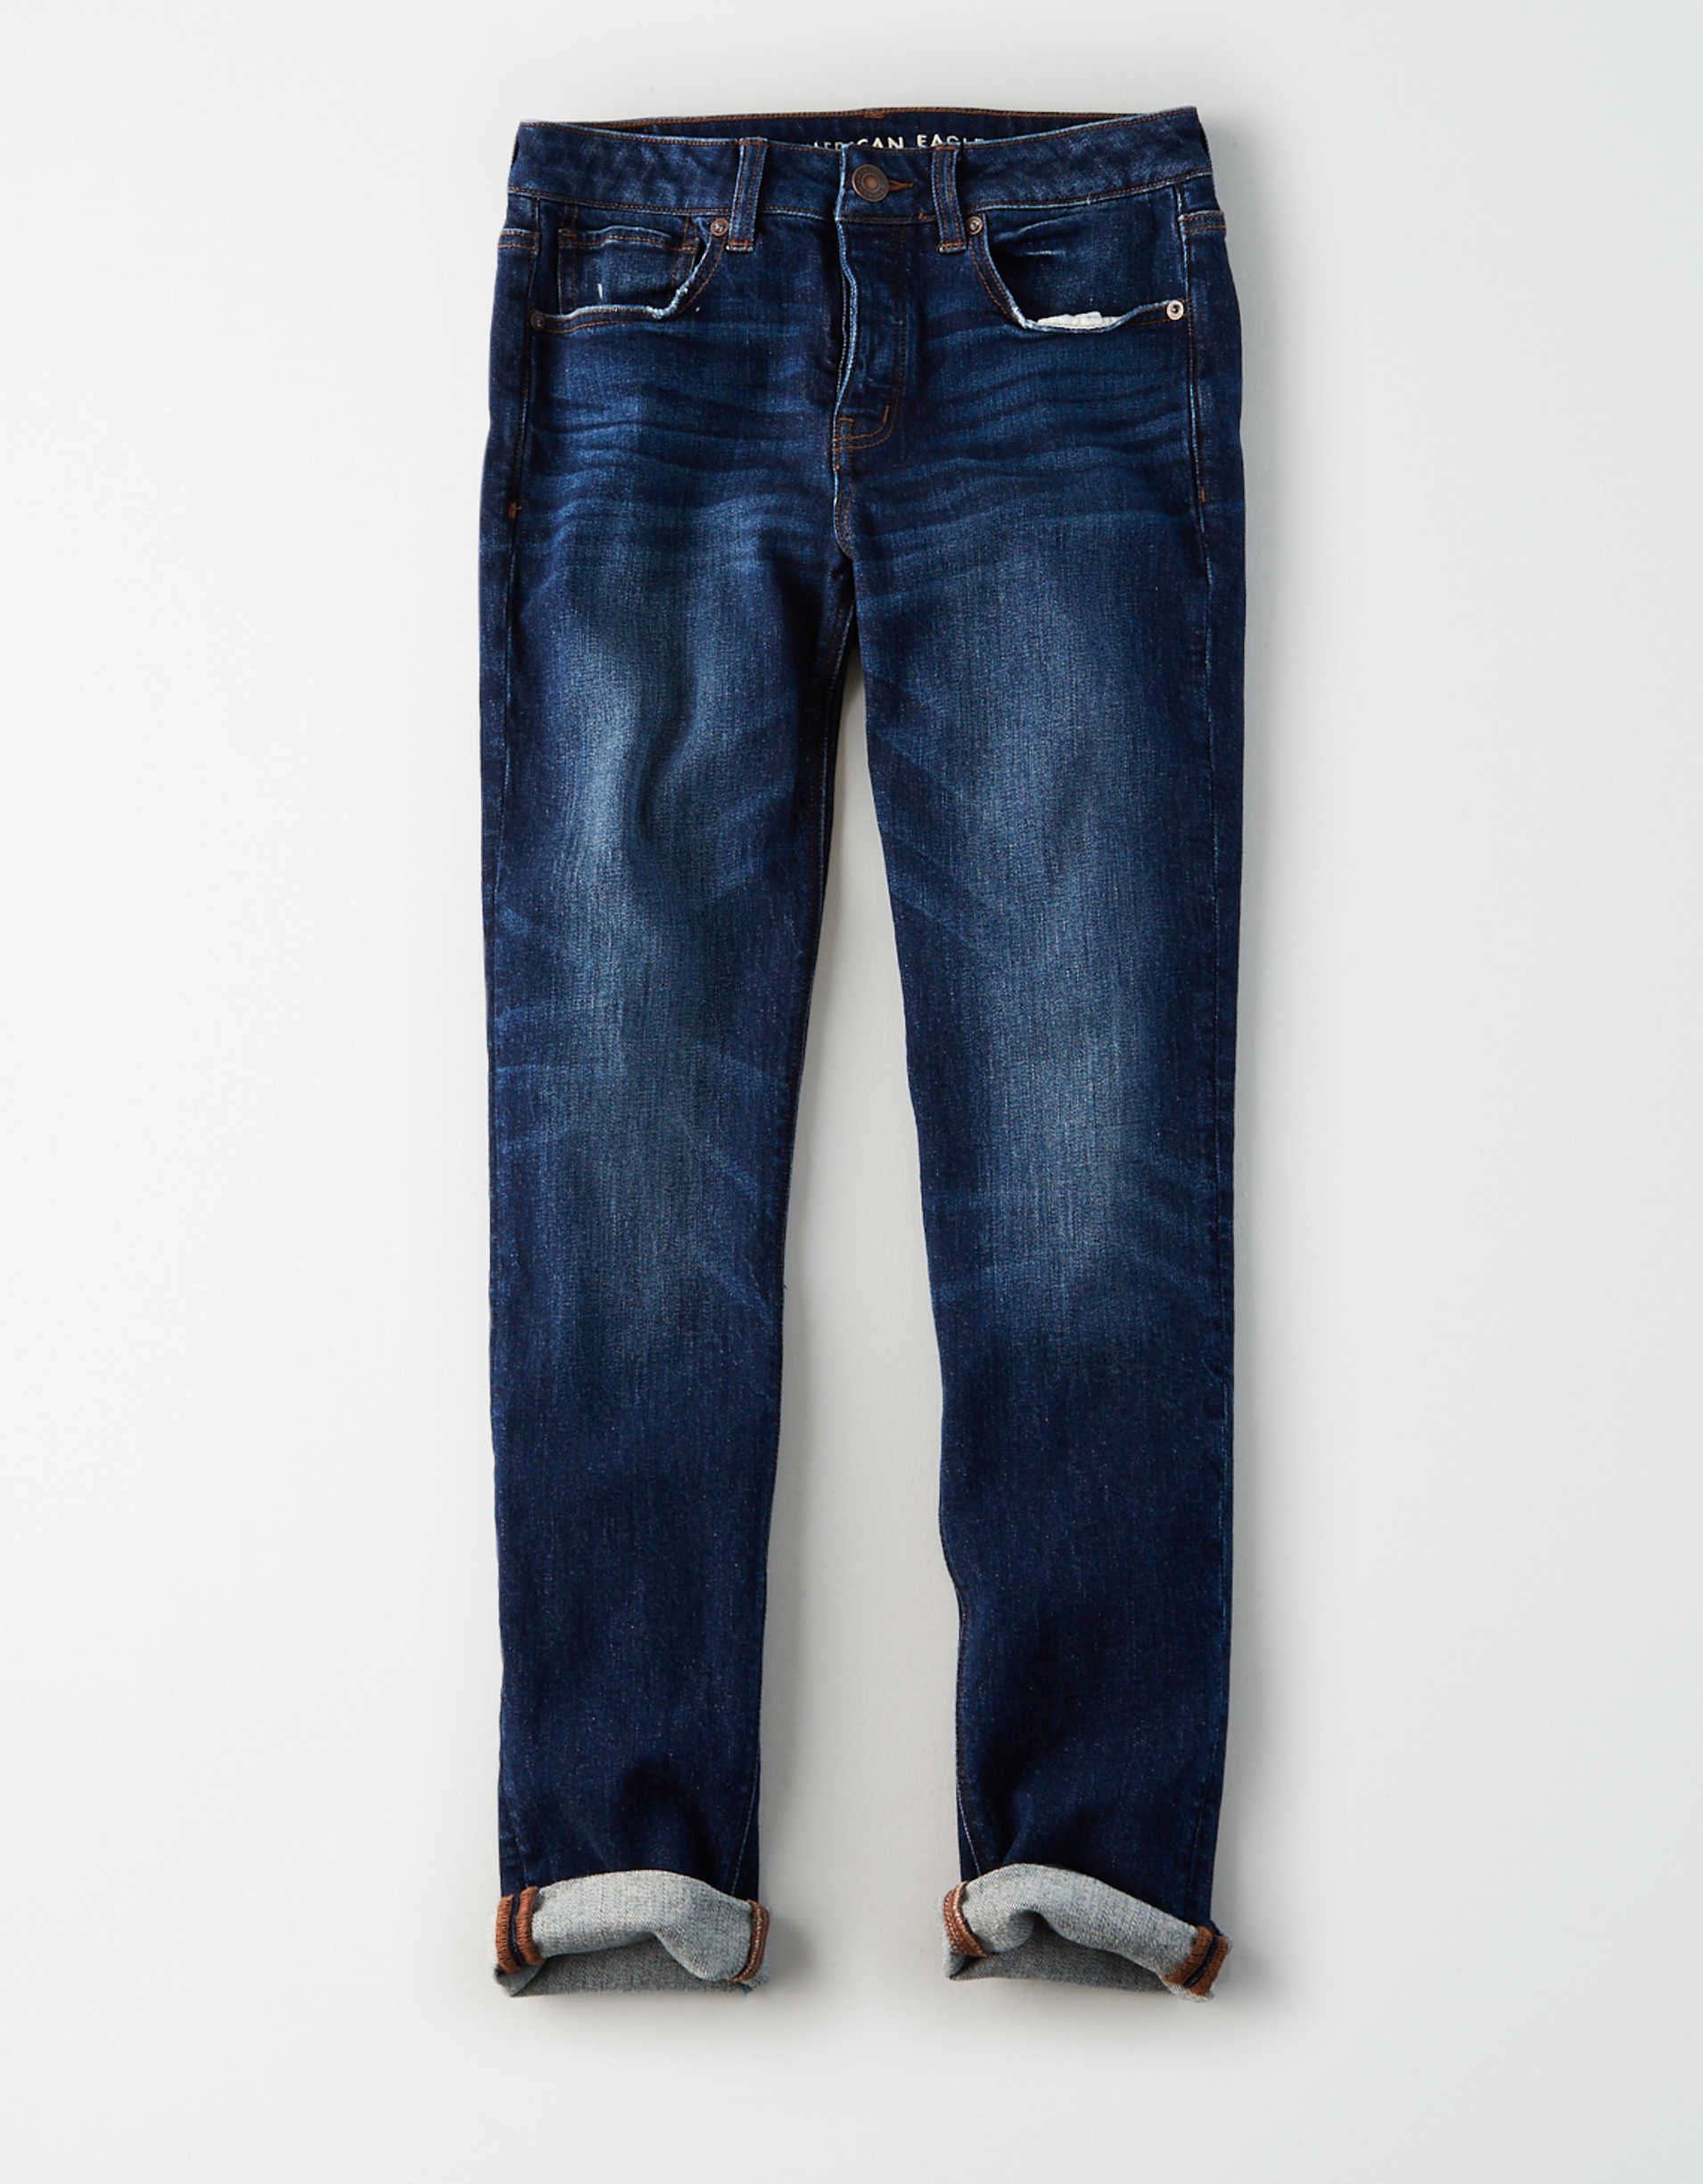 Jeans For Everybody: Η American Eagle με έμαθε μέσα από ένα jean να αγαπάω περισσότερο τον εαυτό μου